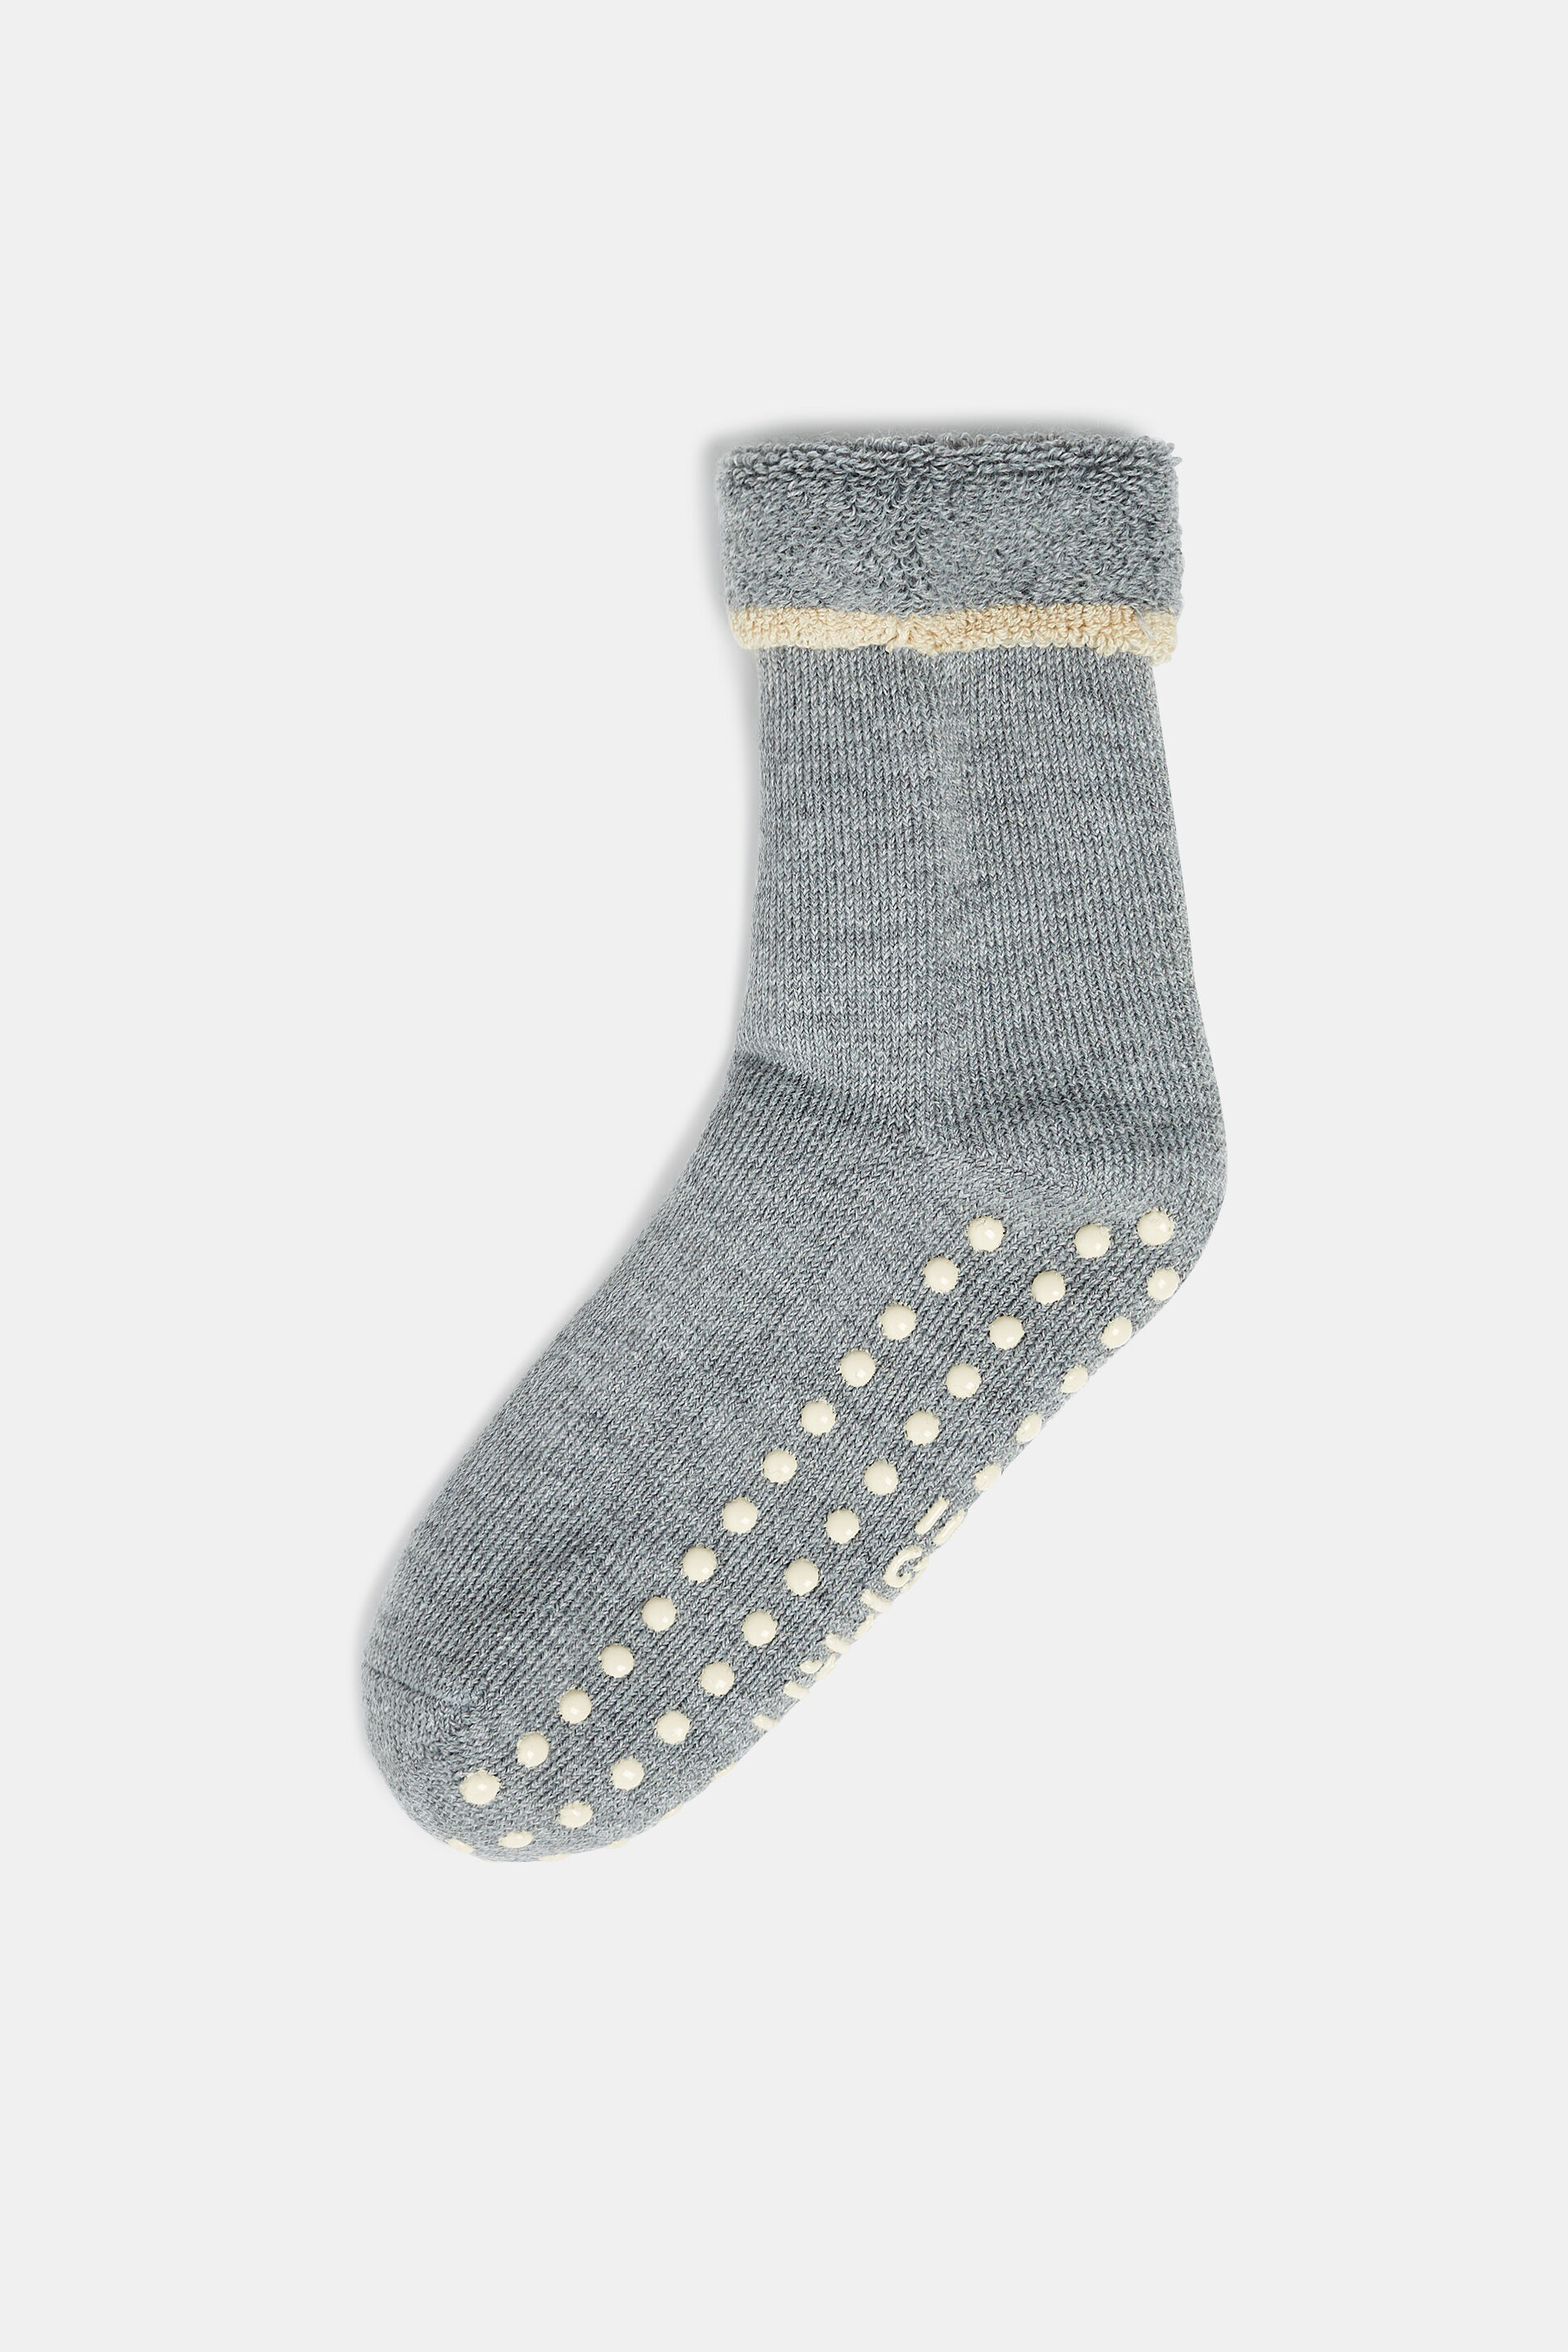 Esprit Online Store Soft stopper socks, wool blend